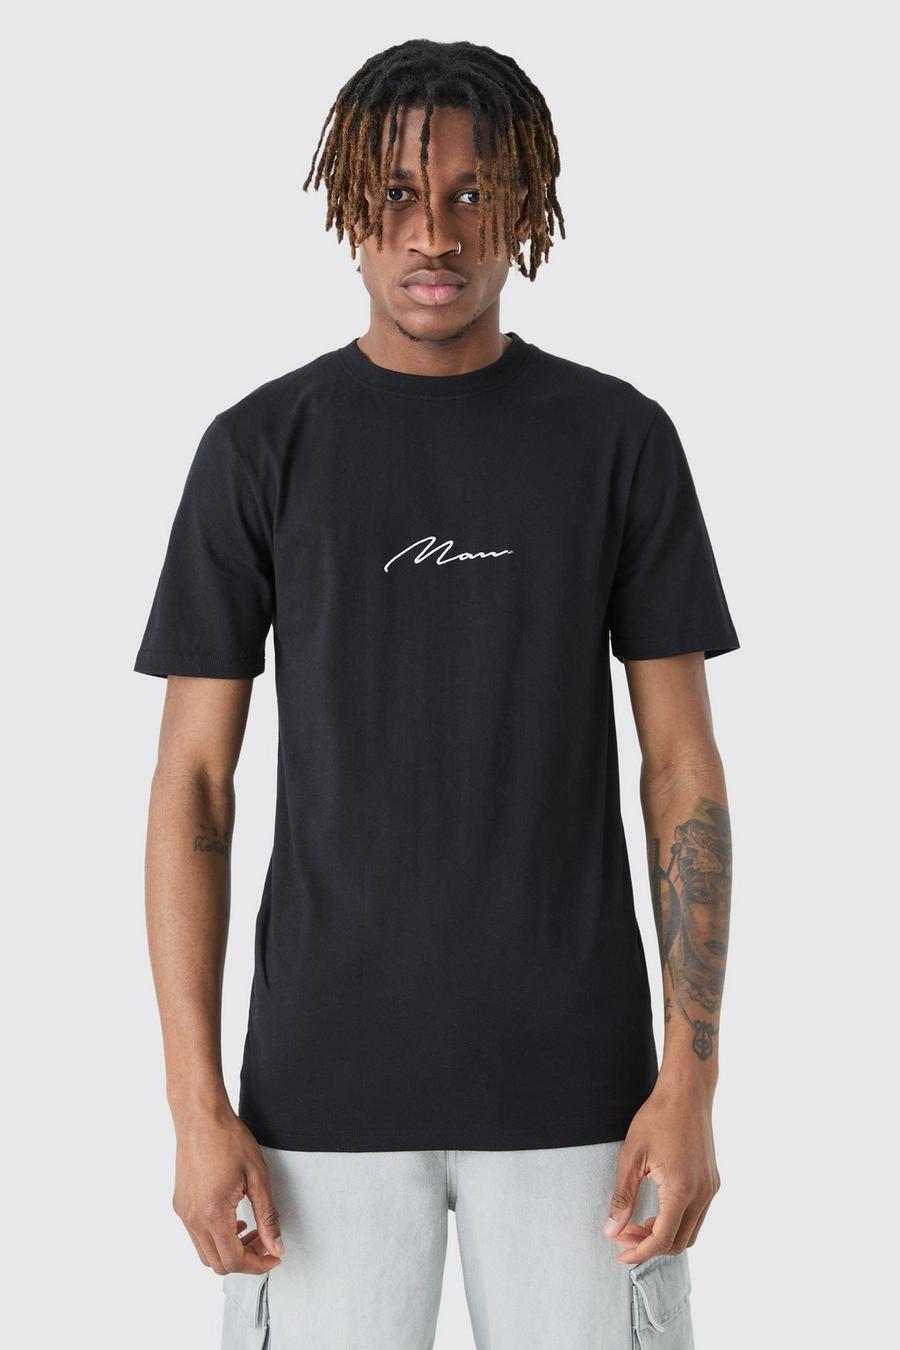 Camiseta Tall con firma MAN ajustada al músculo, Black